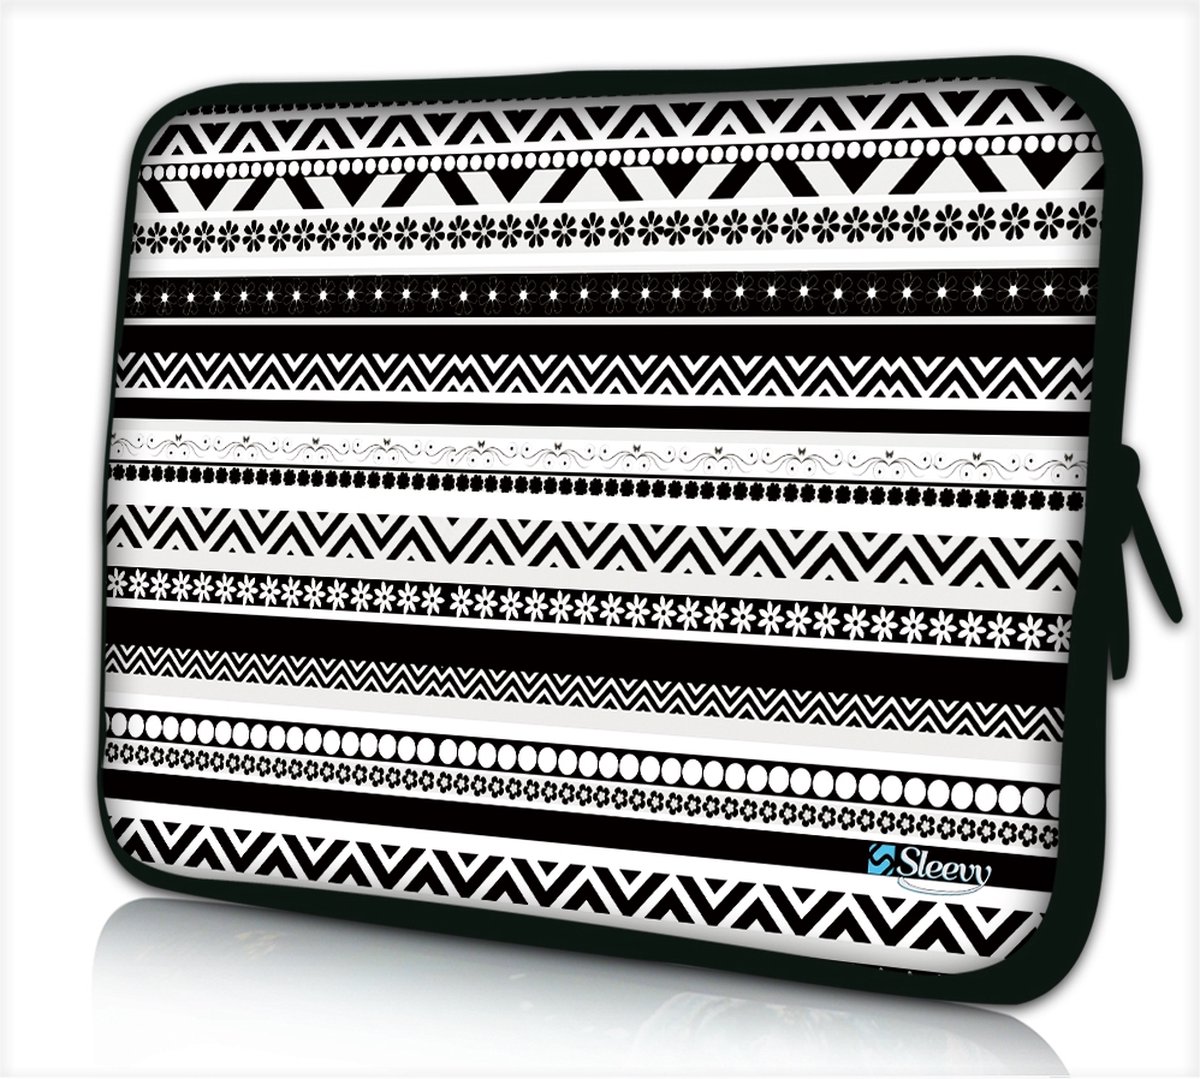 Sleevy 11.6 laptophoes/macbookhoes artistiek zwart wit - laptop sleeve - Sleevy collectie 300+ designs